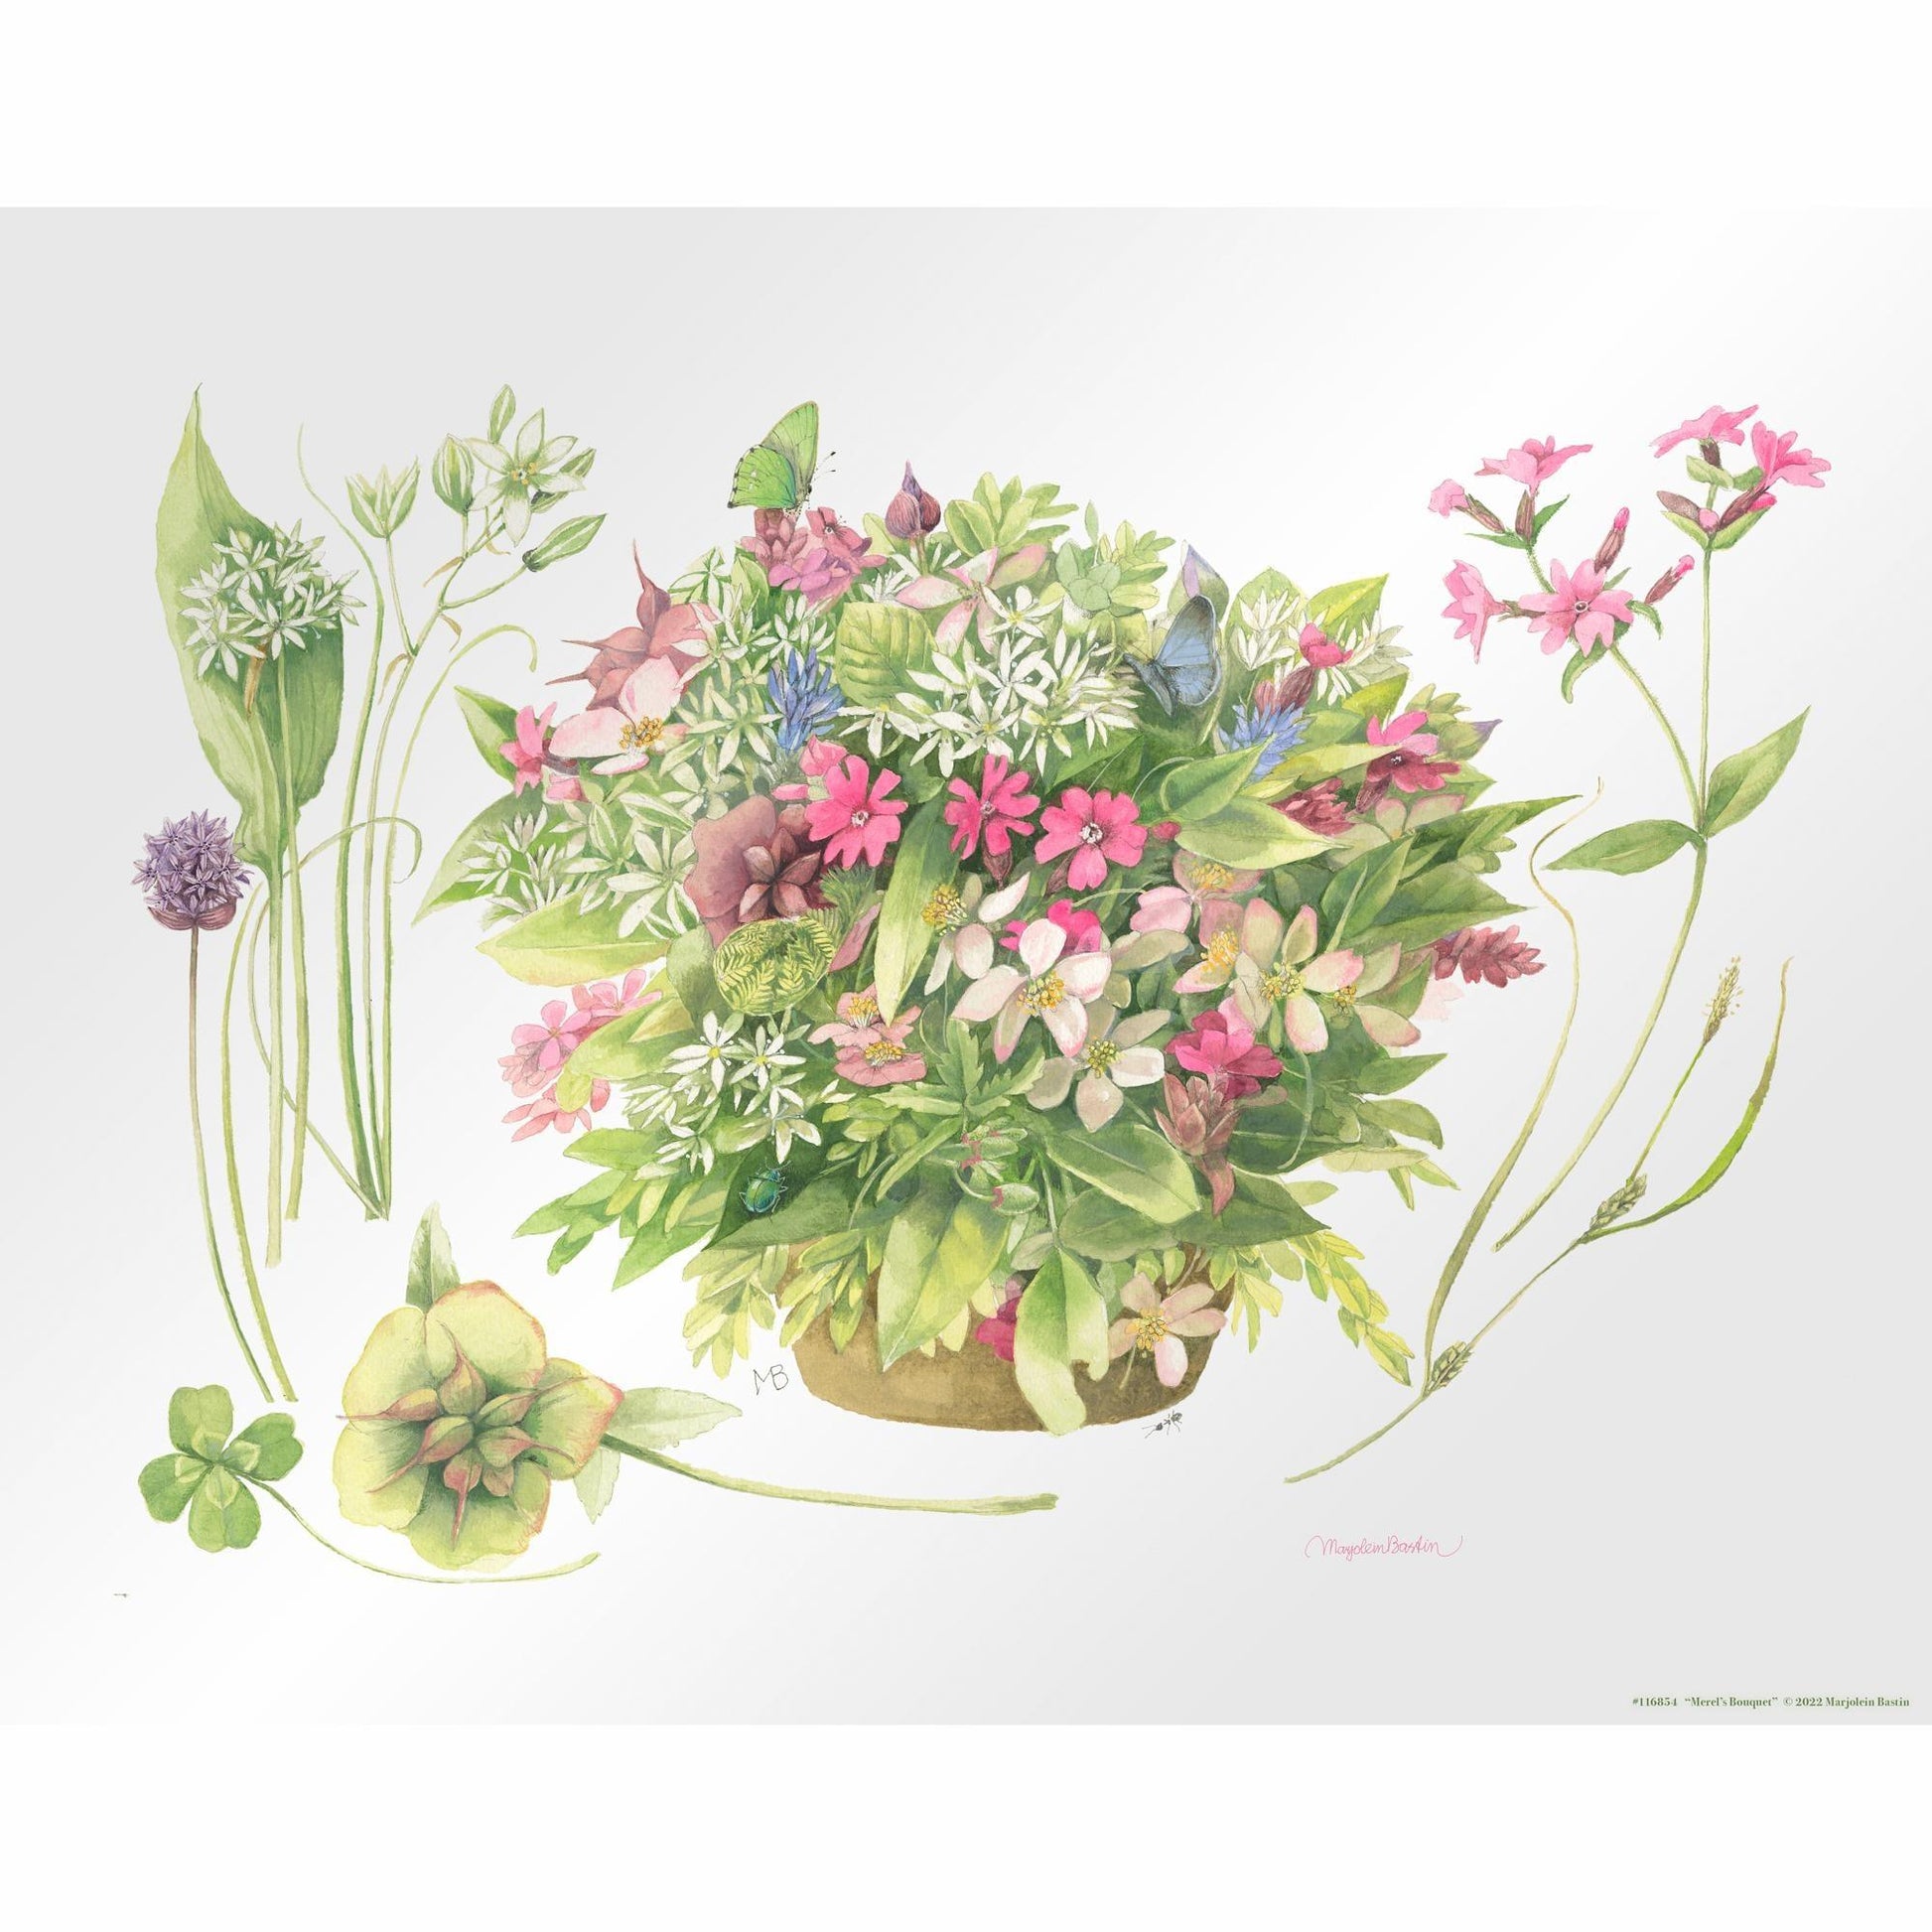 merels-bouquet11x14-apbastin-1058510090.jpg